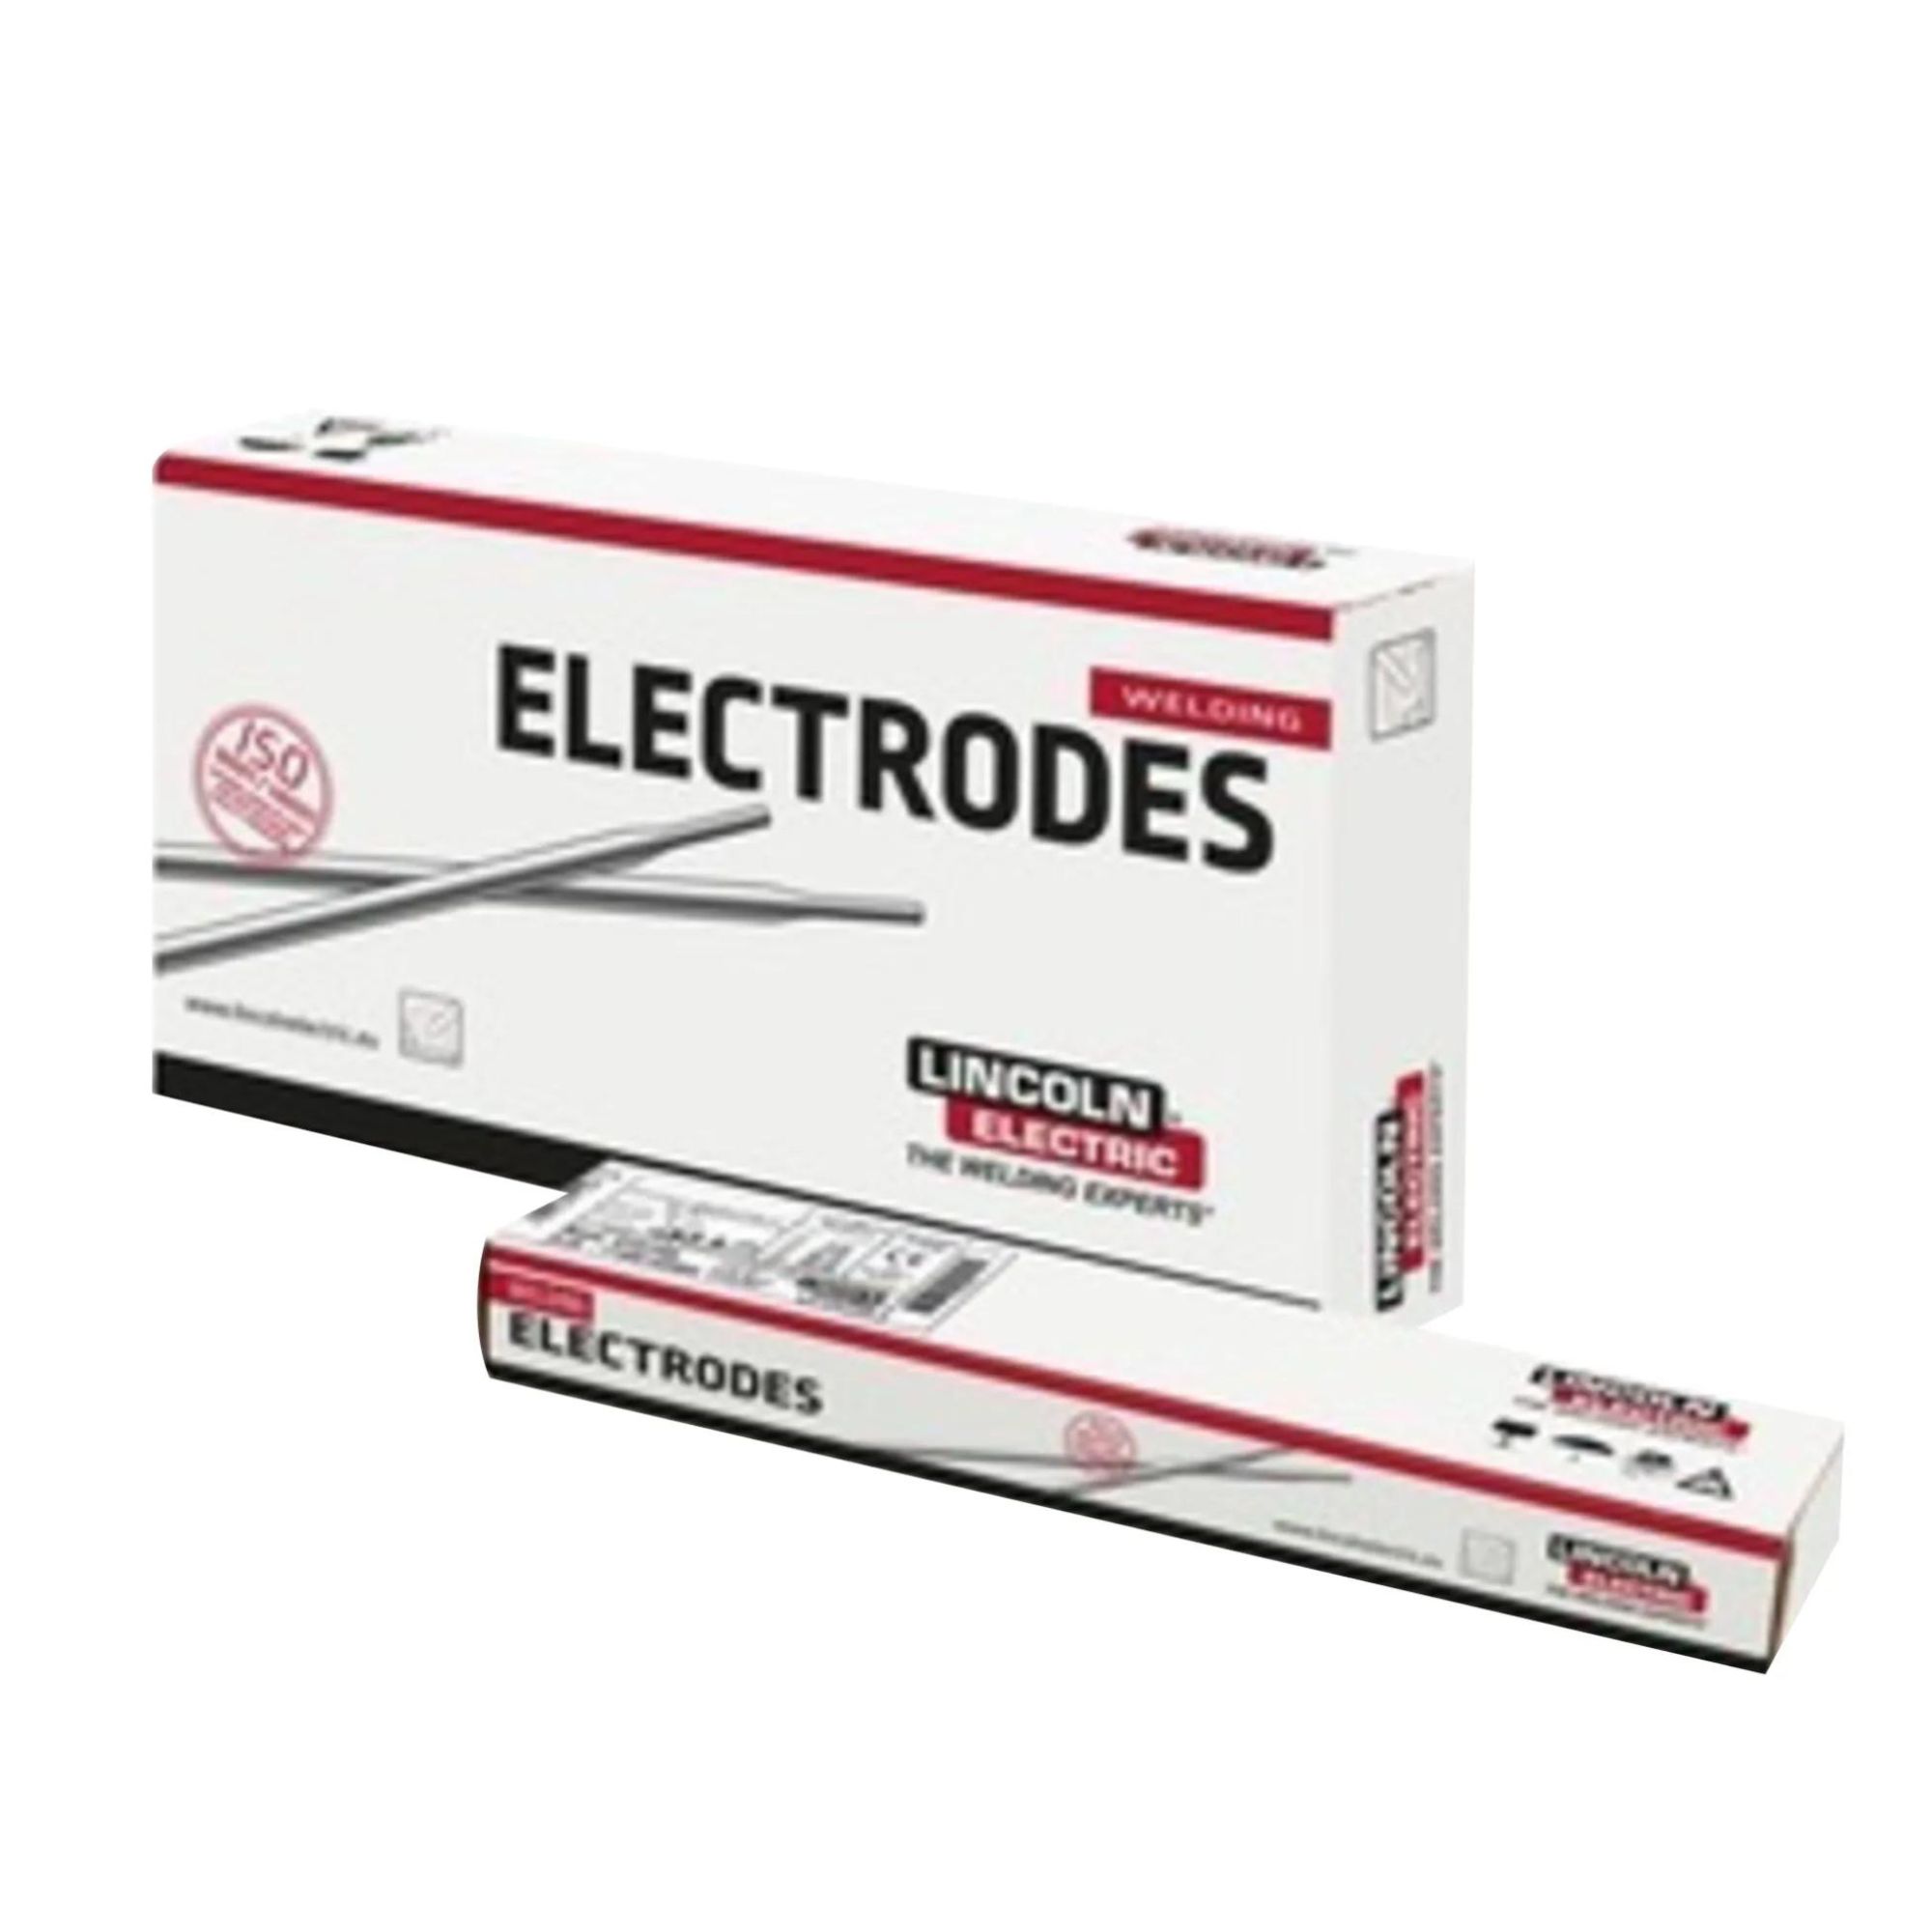 100 ELETRODOS 3,25mm LINOX E316L LINCOLN